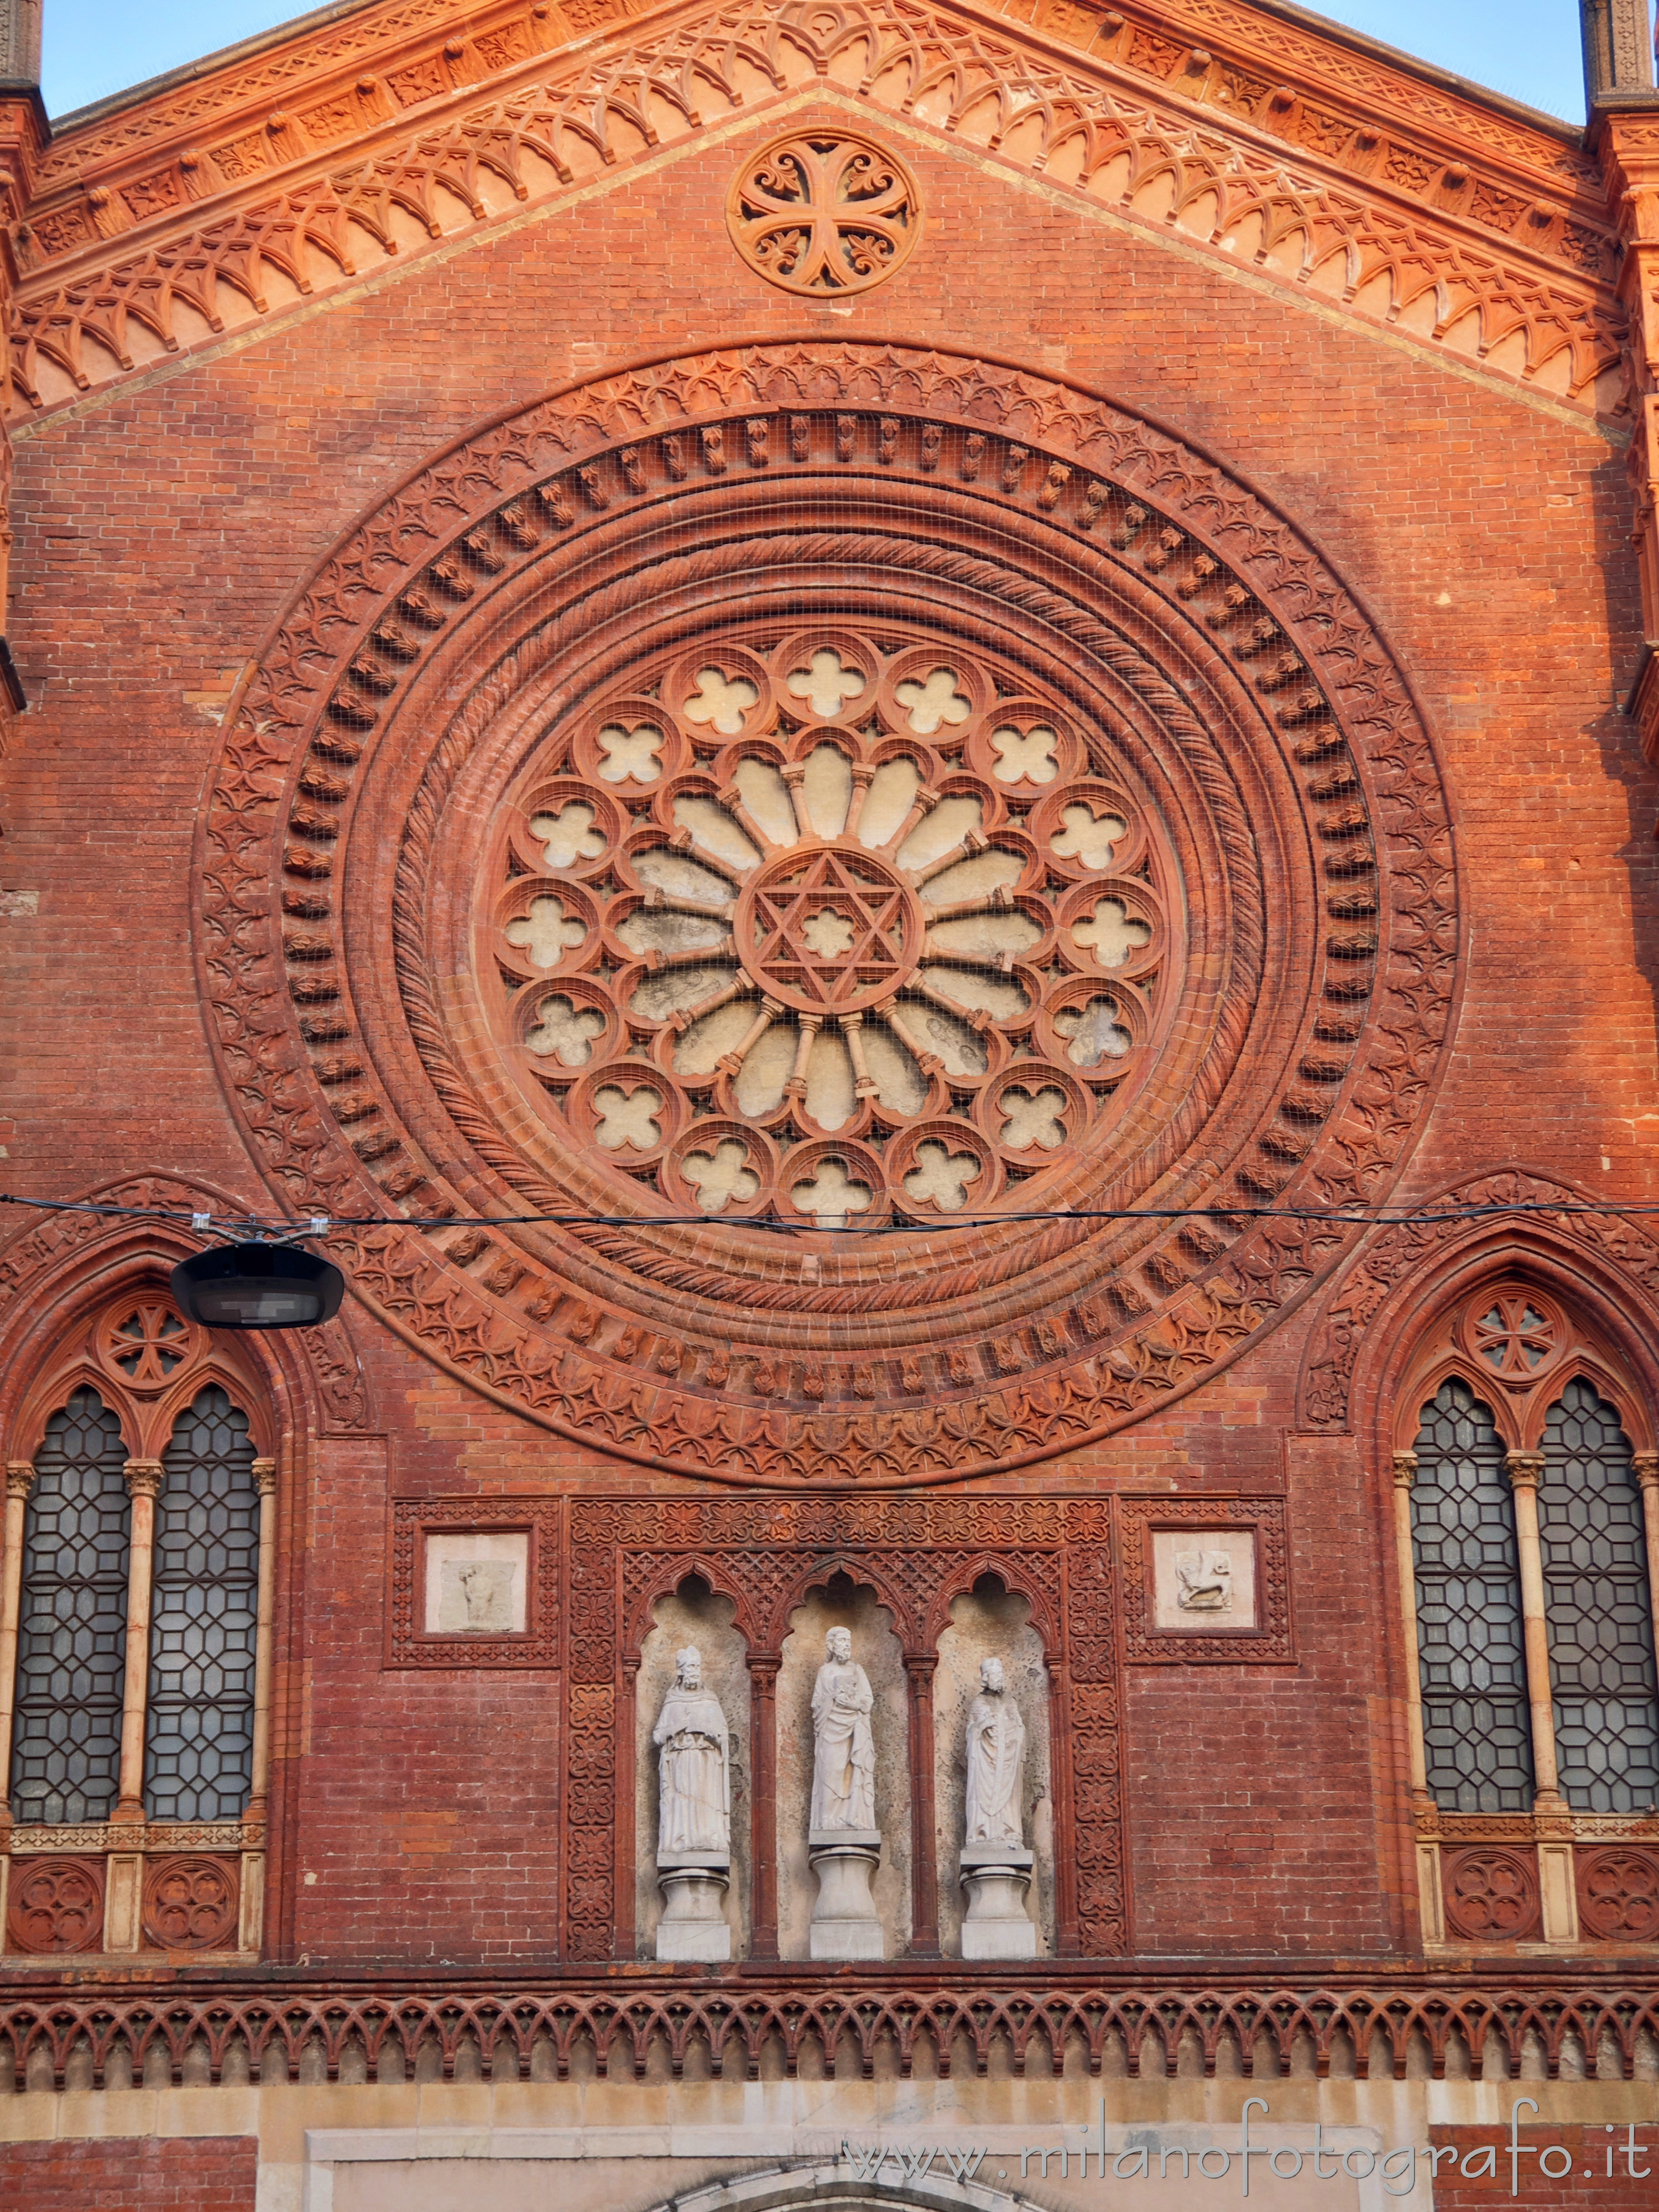 Milan (Italy): Rose Window on the facade of St. Mark's Basilica - Milan (Italy)